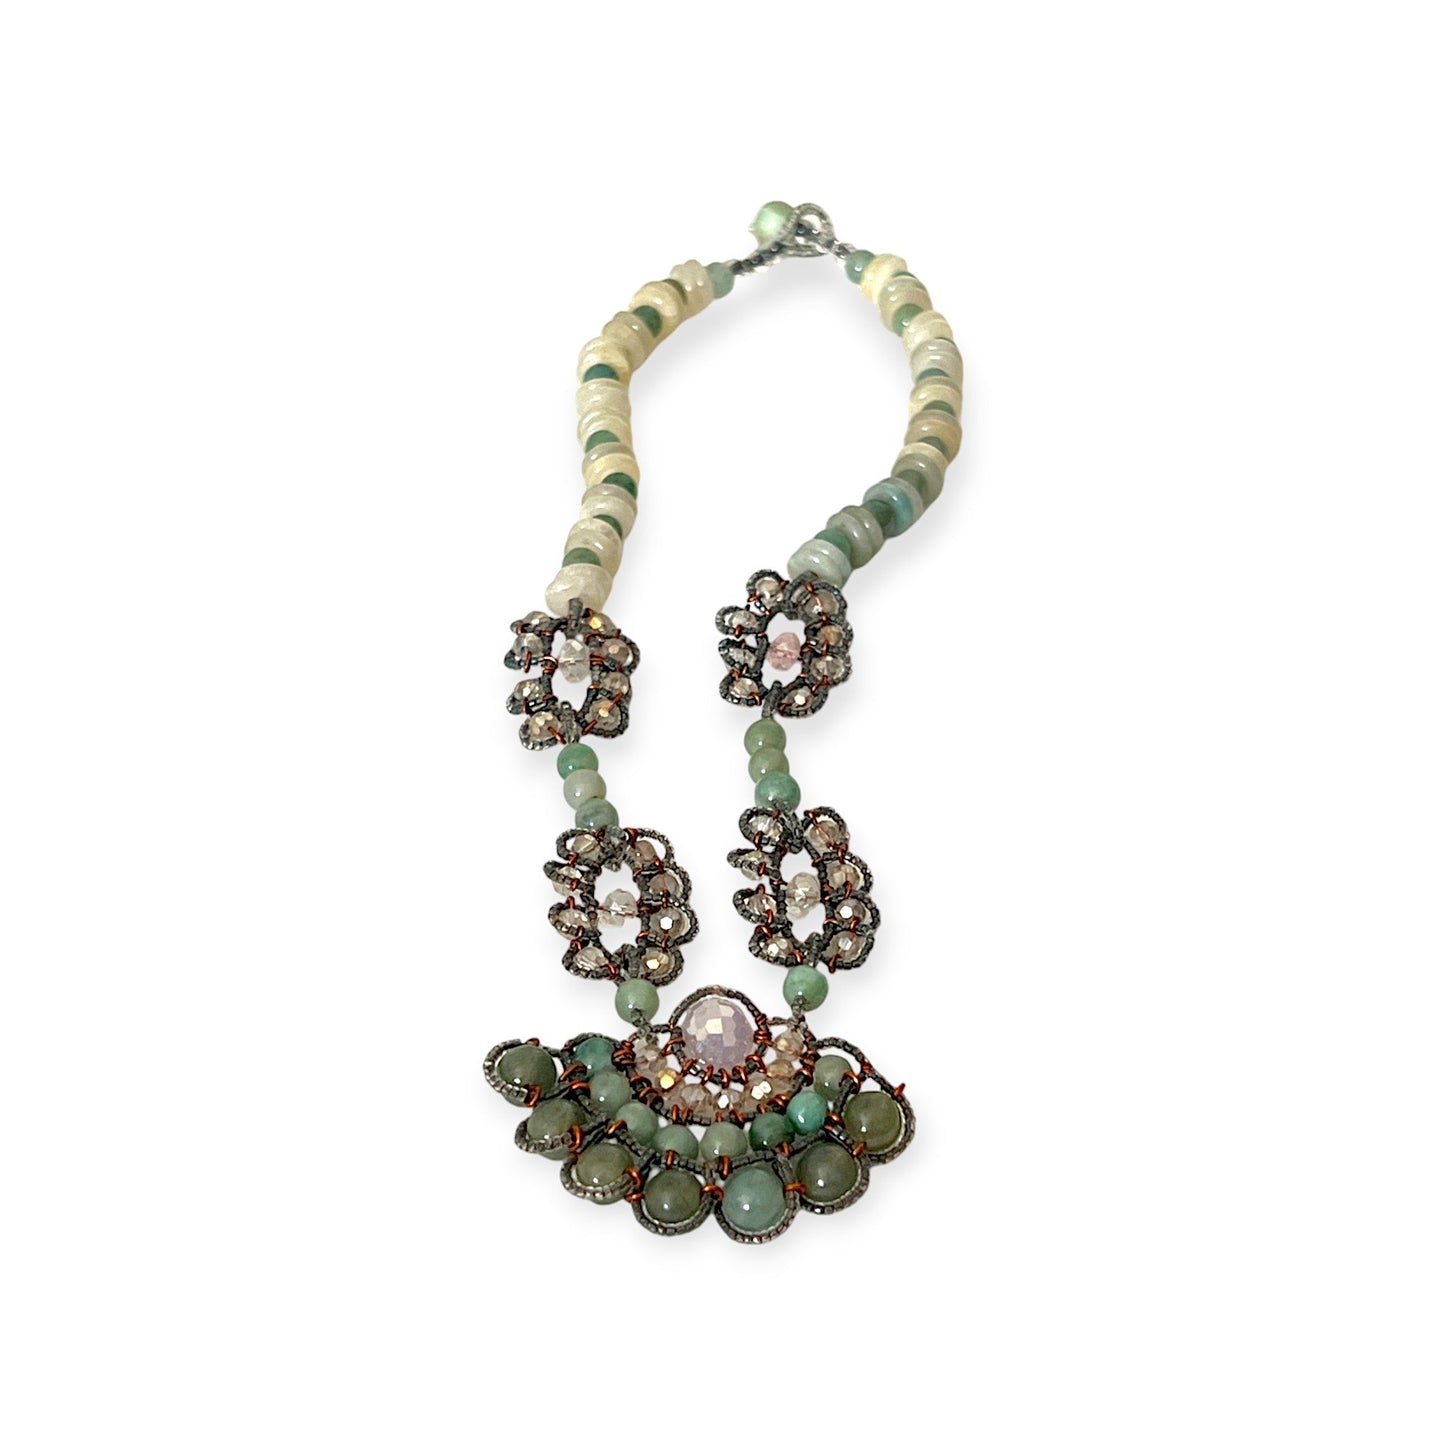 Art deco inspired beaded pendant statement necklace - Sundara Joon